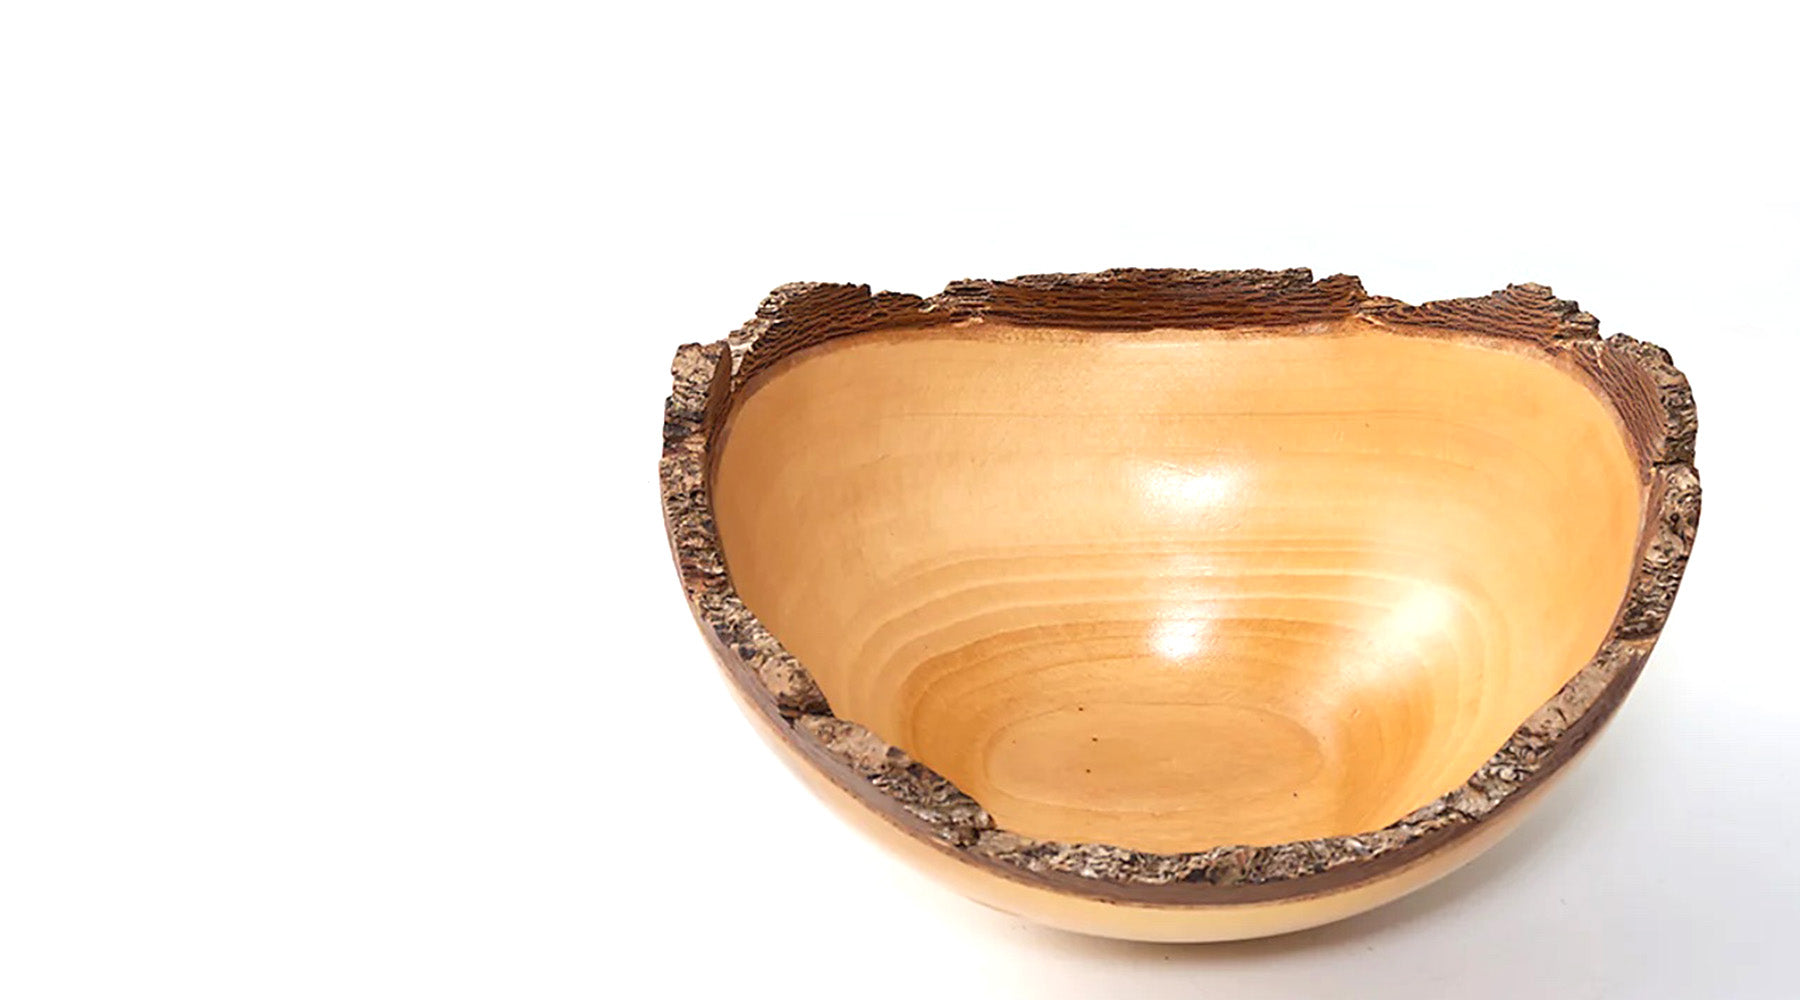 Woodturned bowl with bark edge